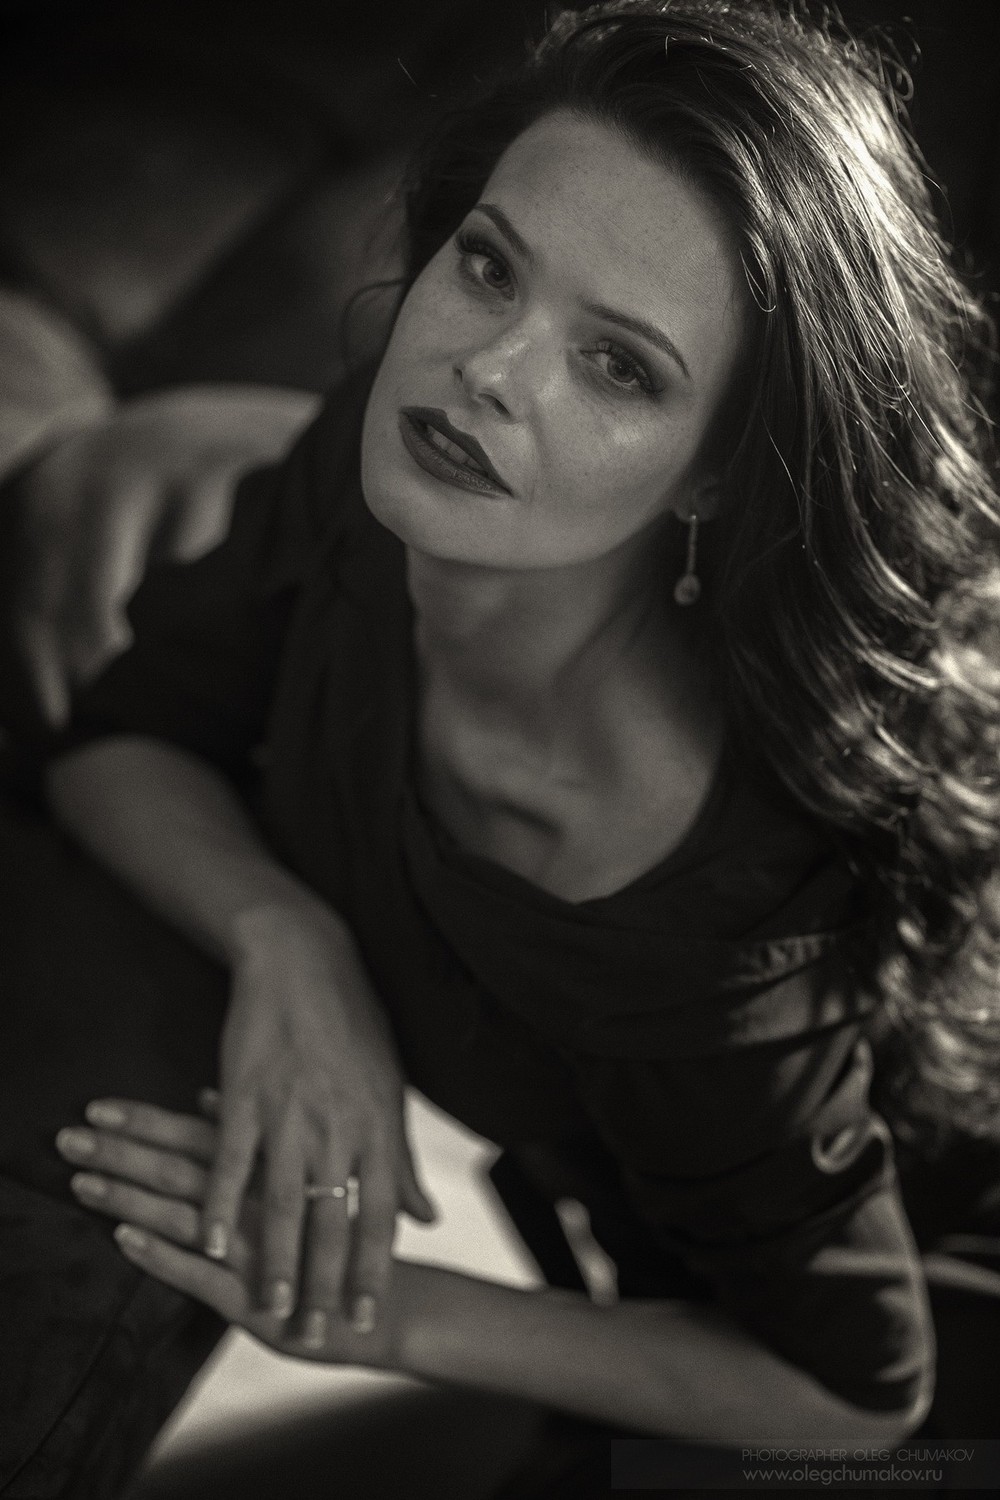 Portraits - Anna Pescova. Actress